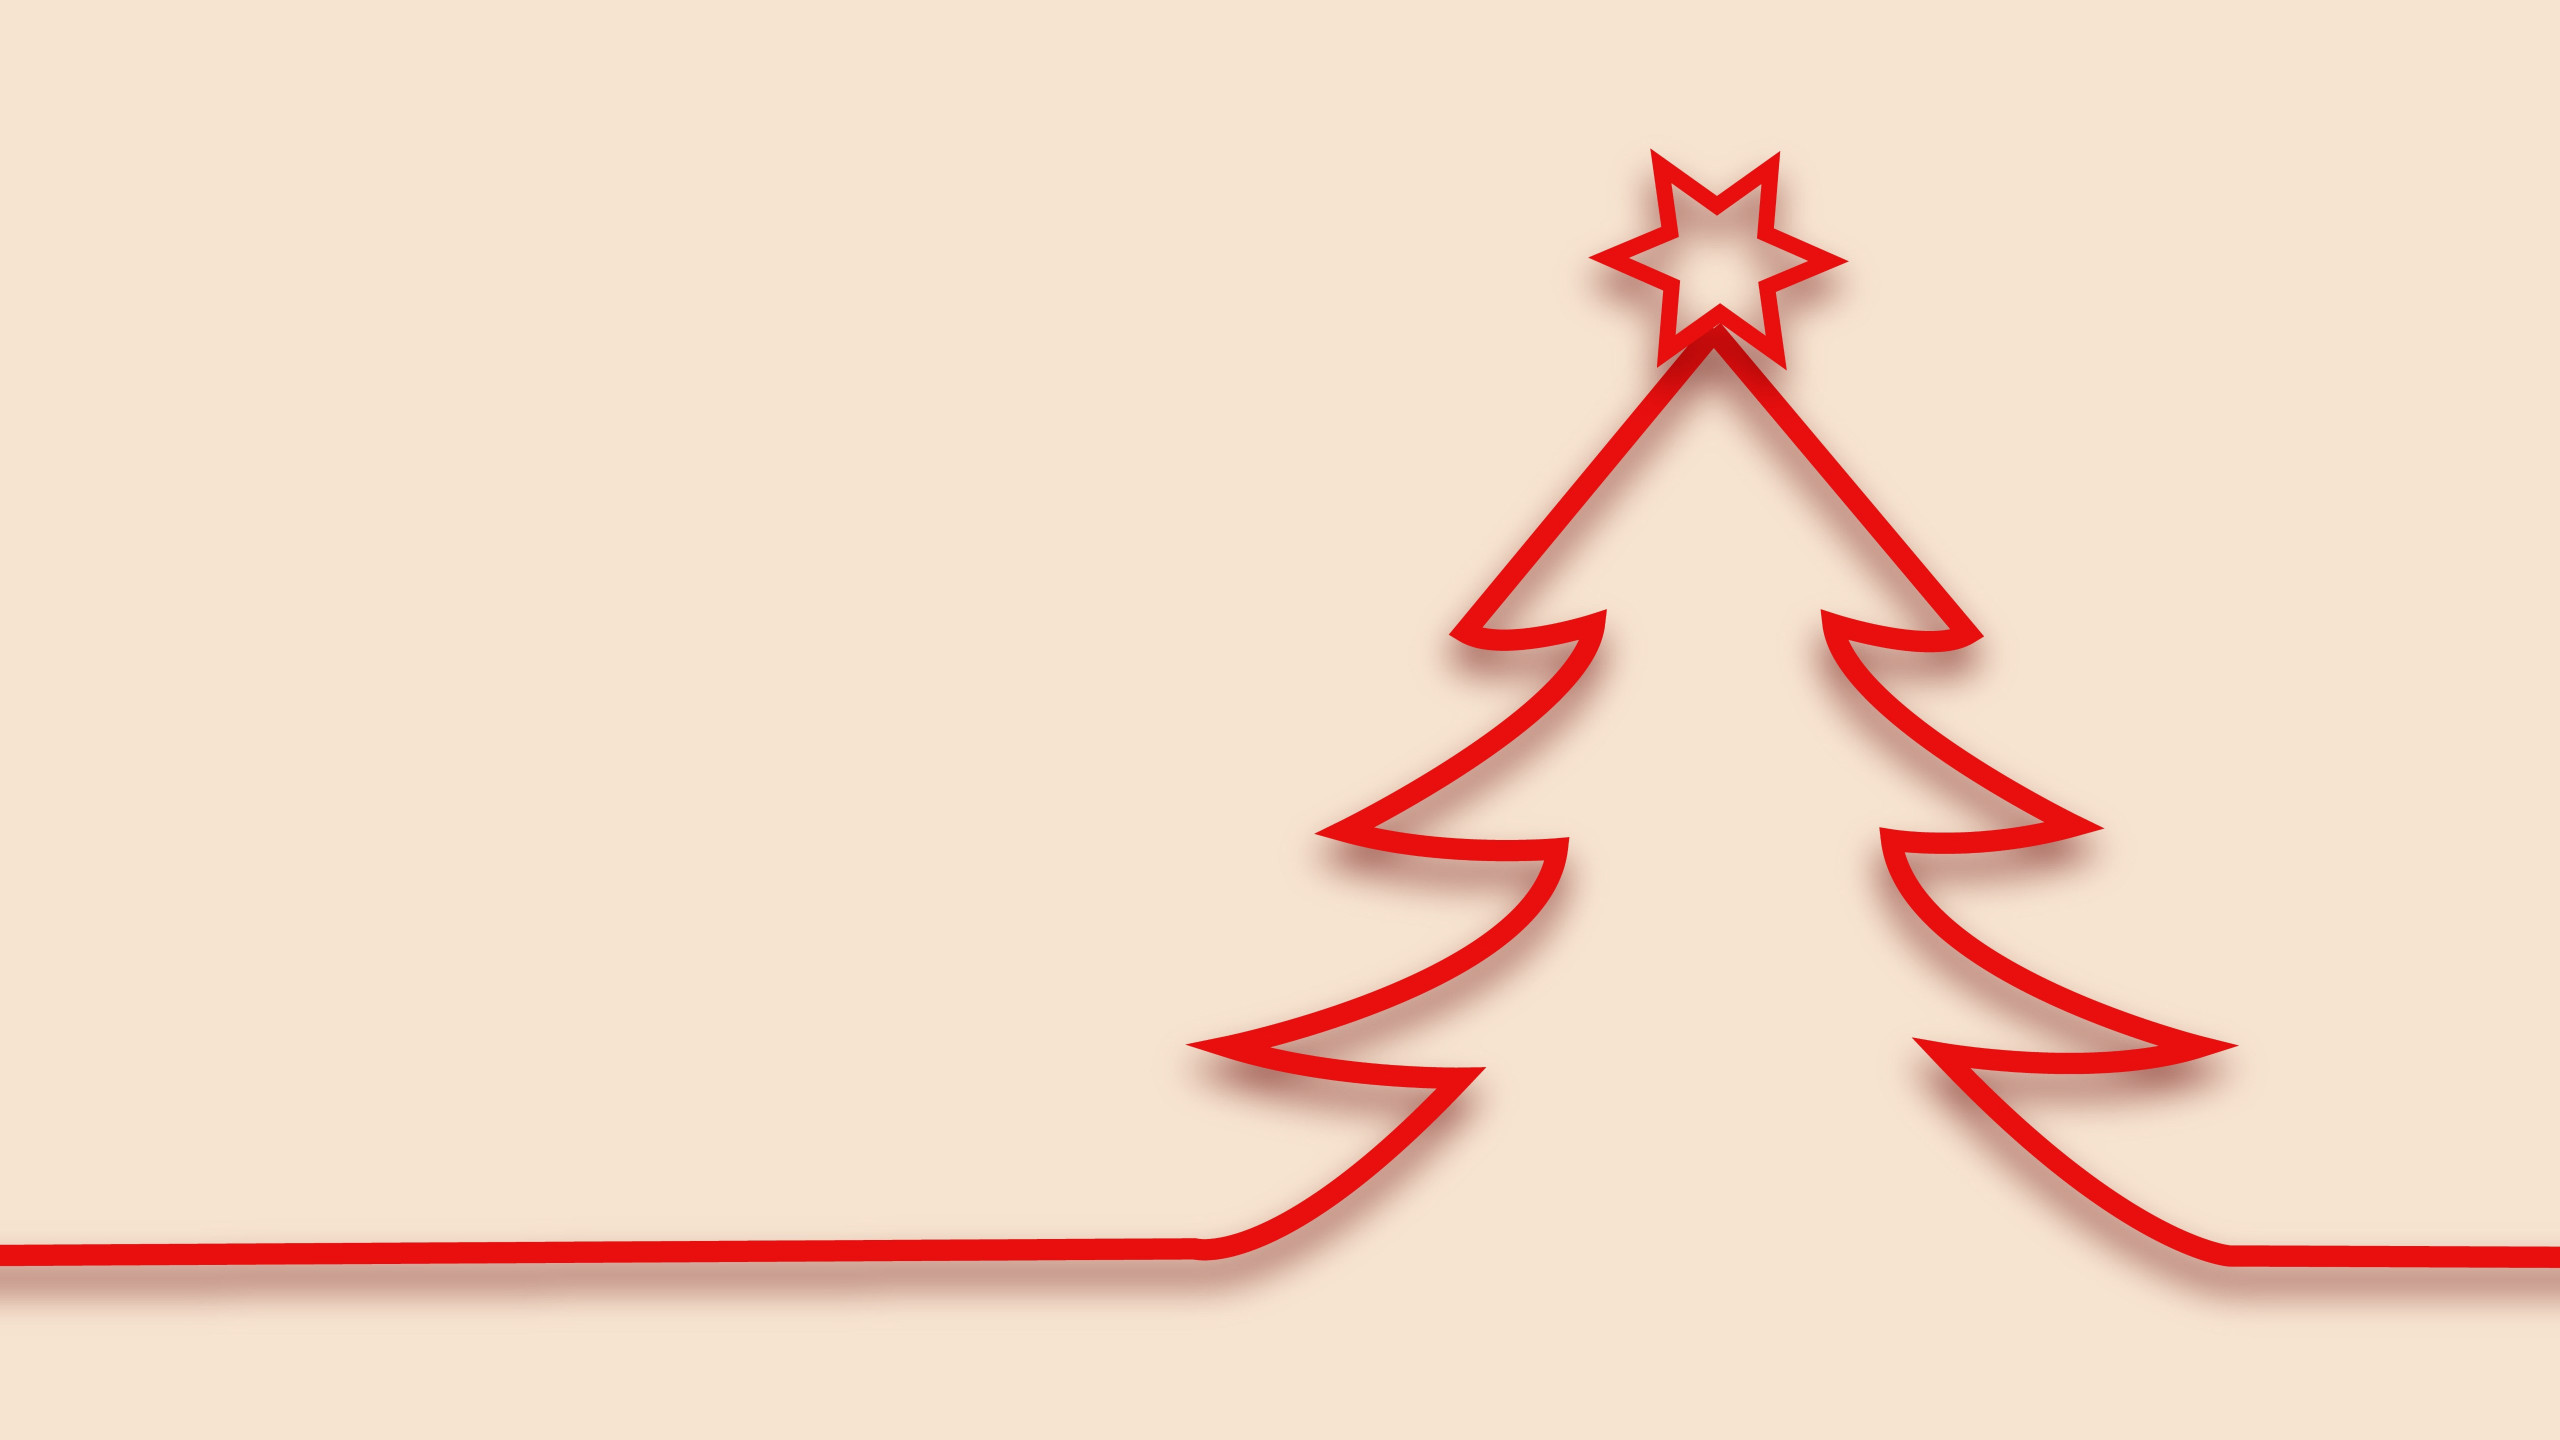 Download wallpaper: Red minimalistic Christmas tree design 2560x1440